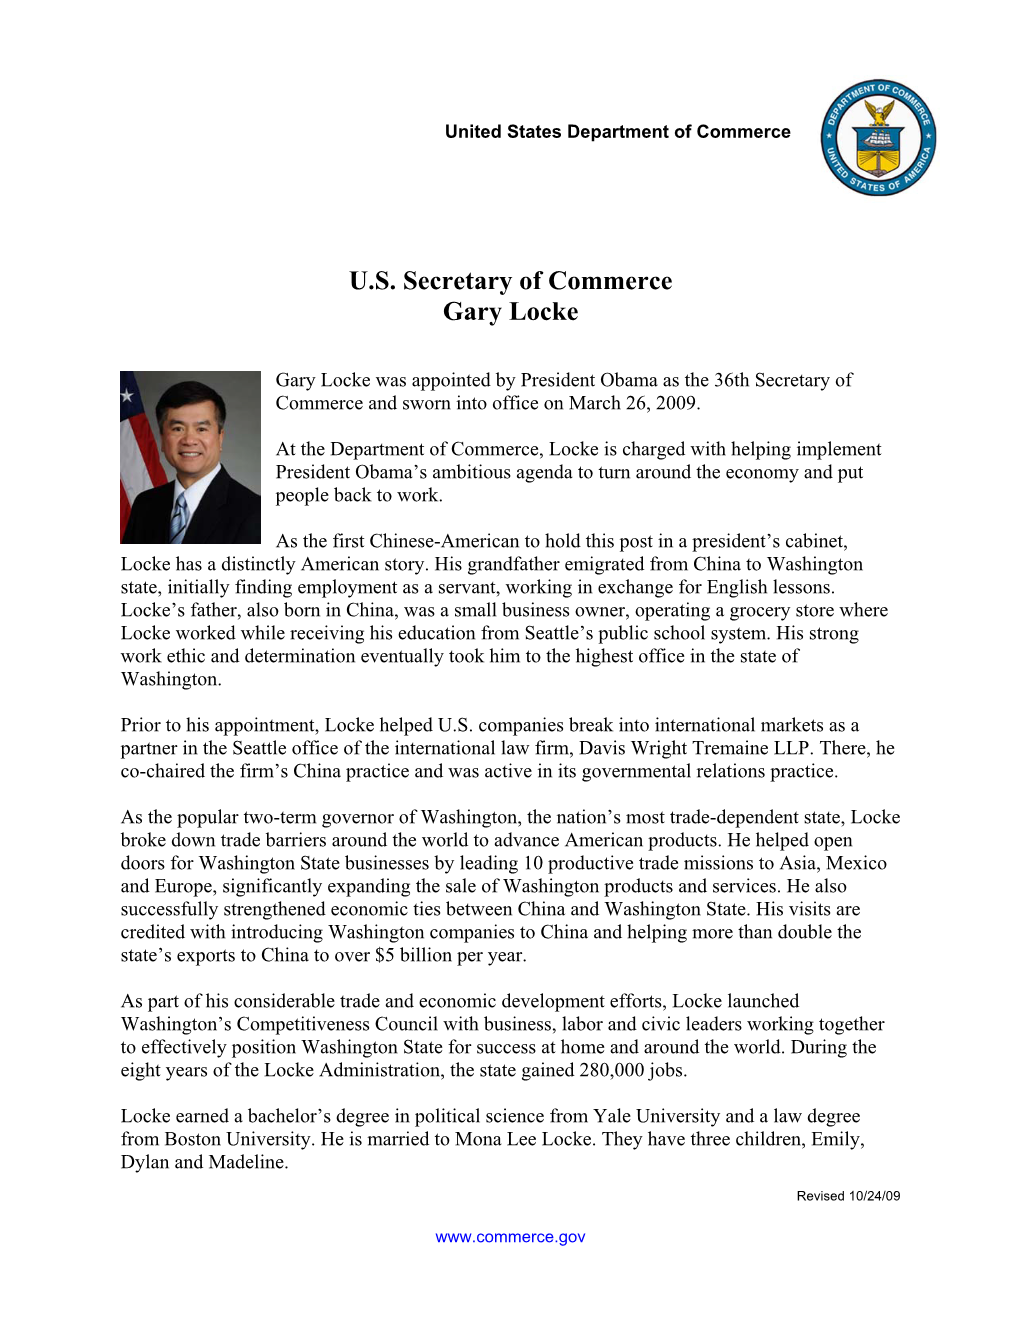 Secretary Gary Locke Biography